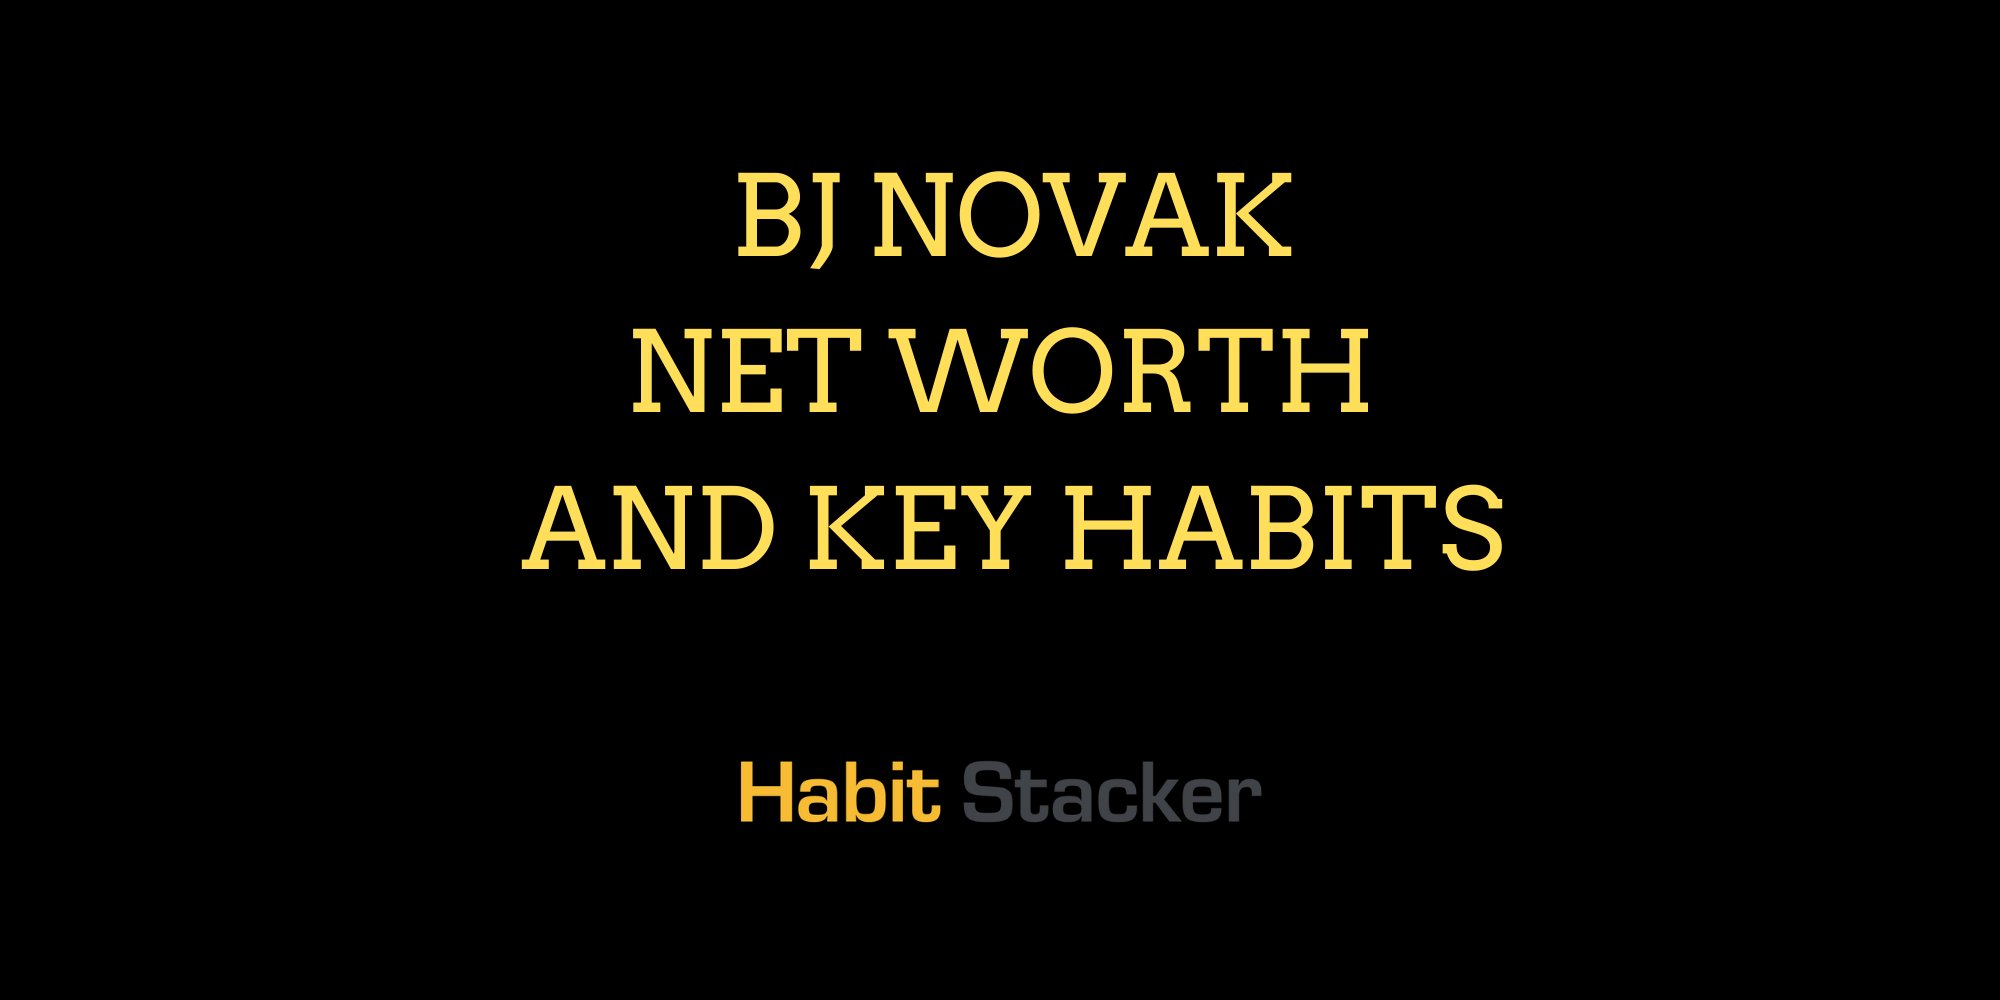 BJ Novak Net Worth